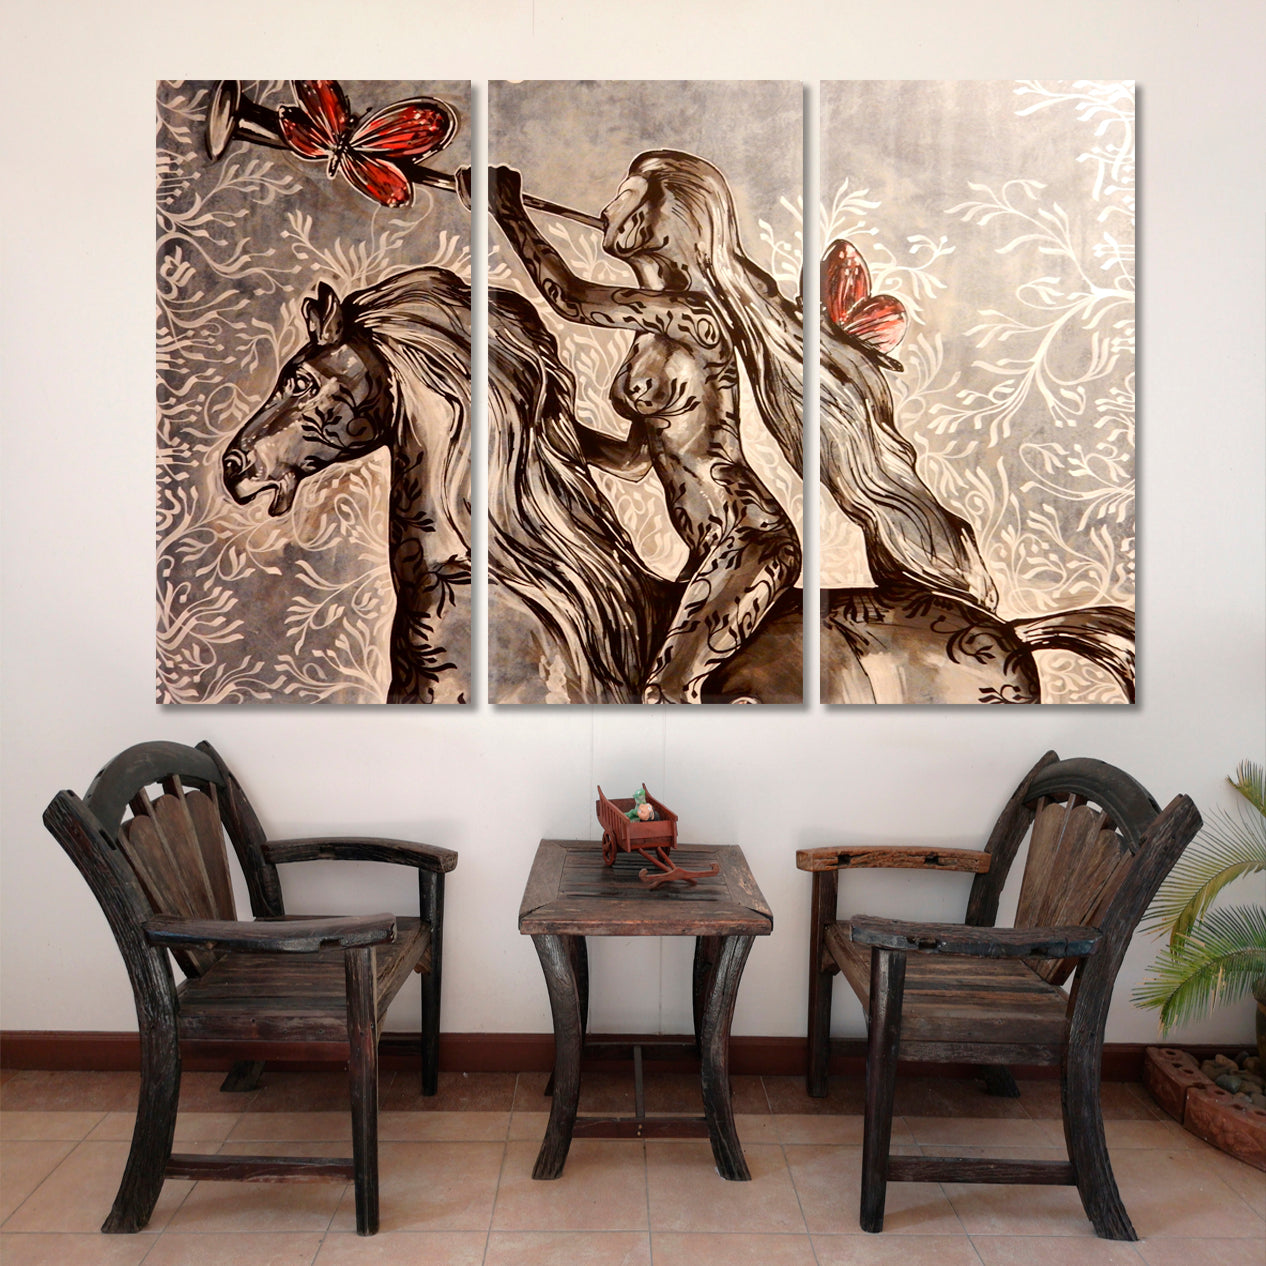 GORGEOUS HORSEWOMAN BEAUTIFUL AMAZON Fine Art Brown Tones Fine Art Artesty 3 panels 36" x 24" 